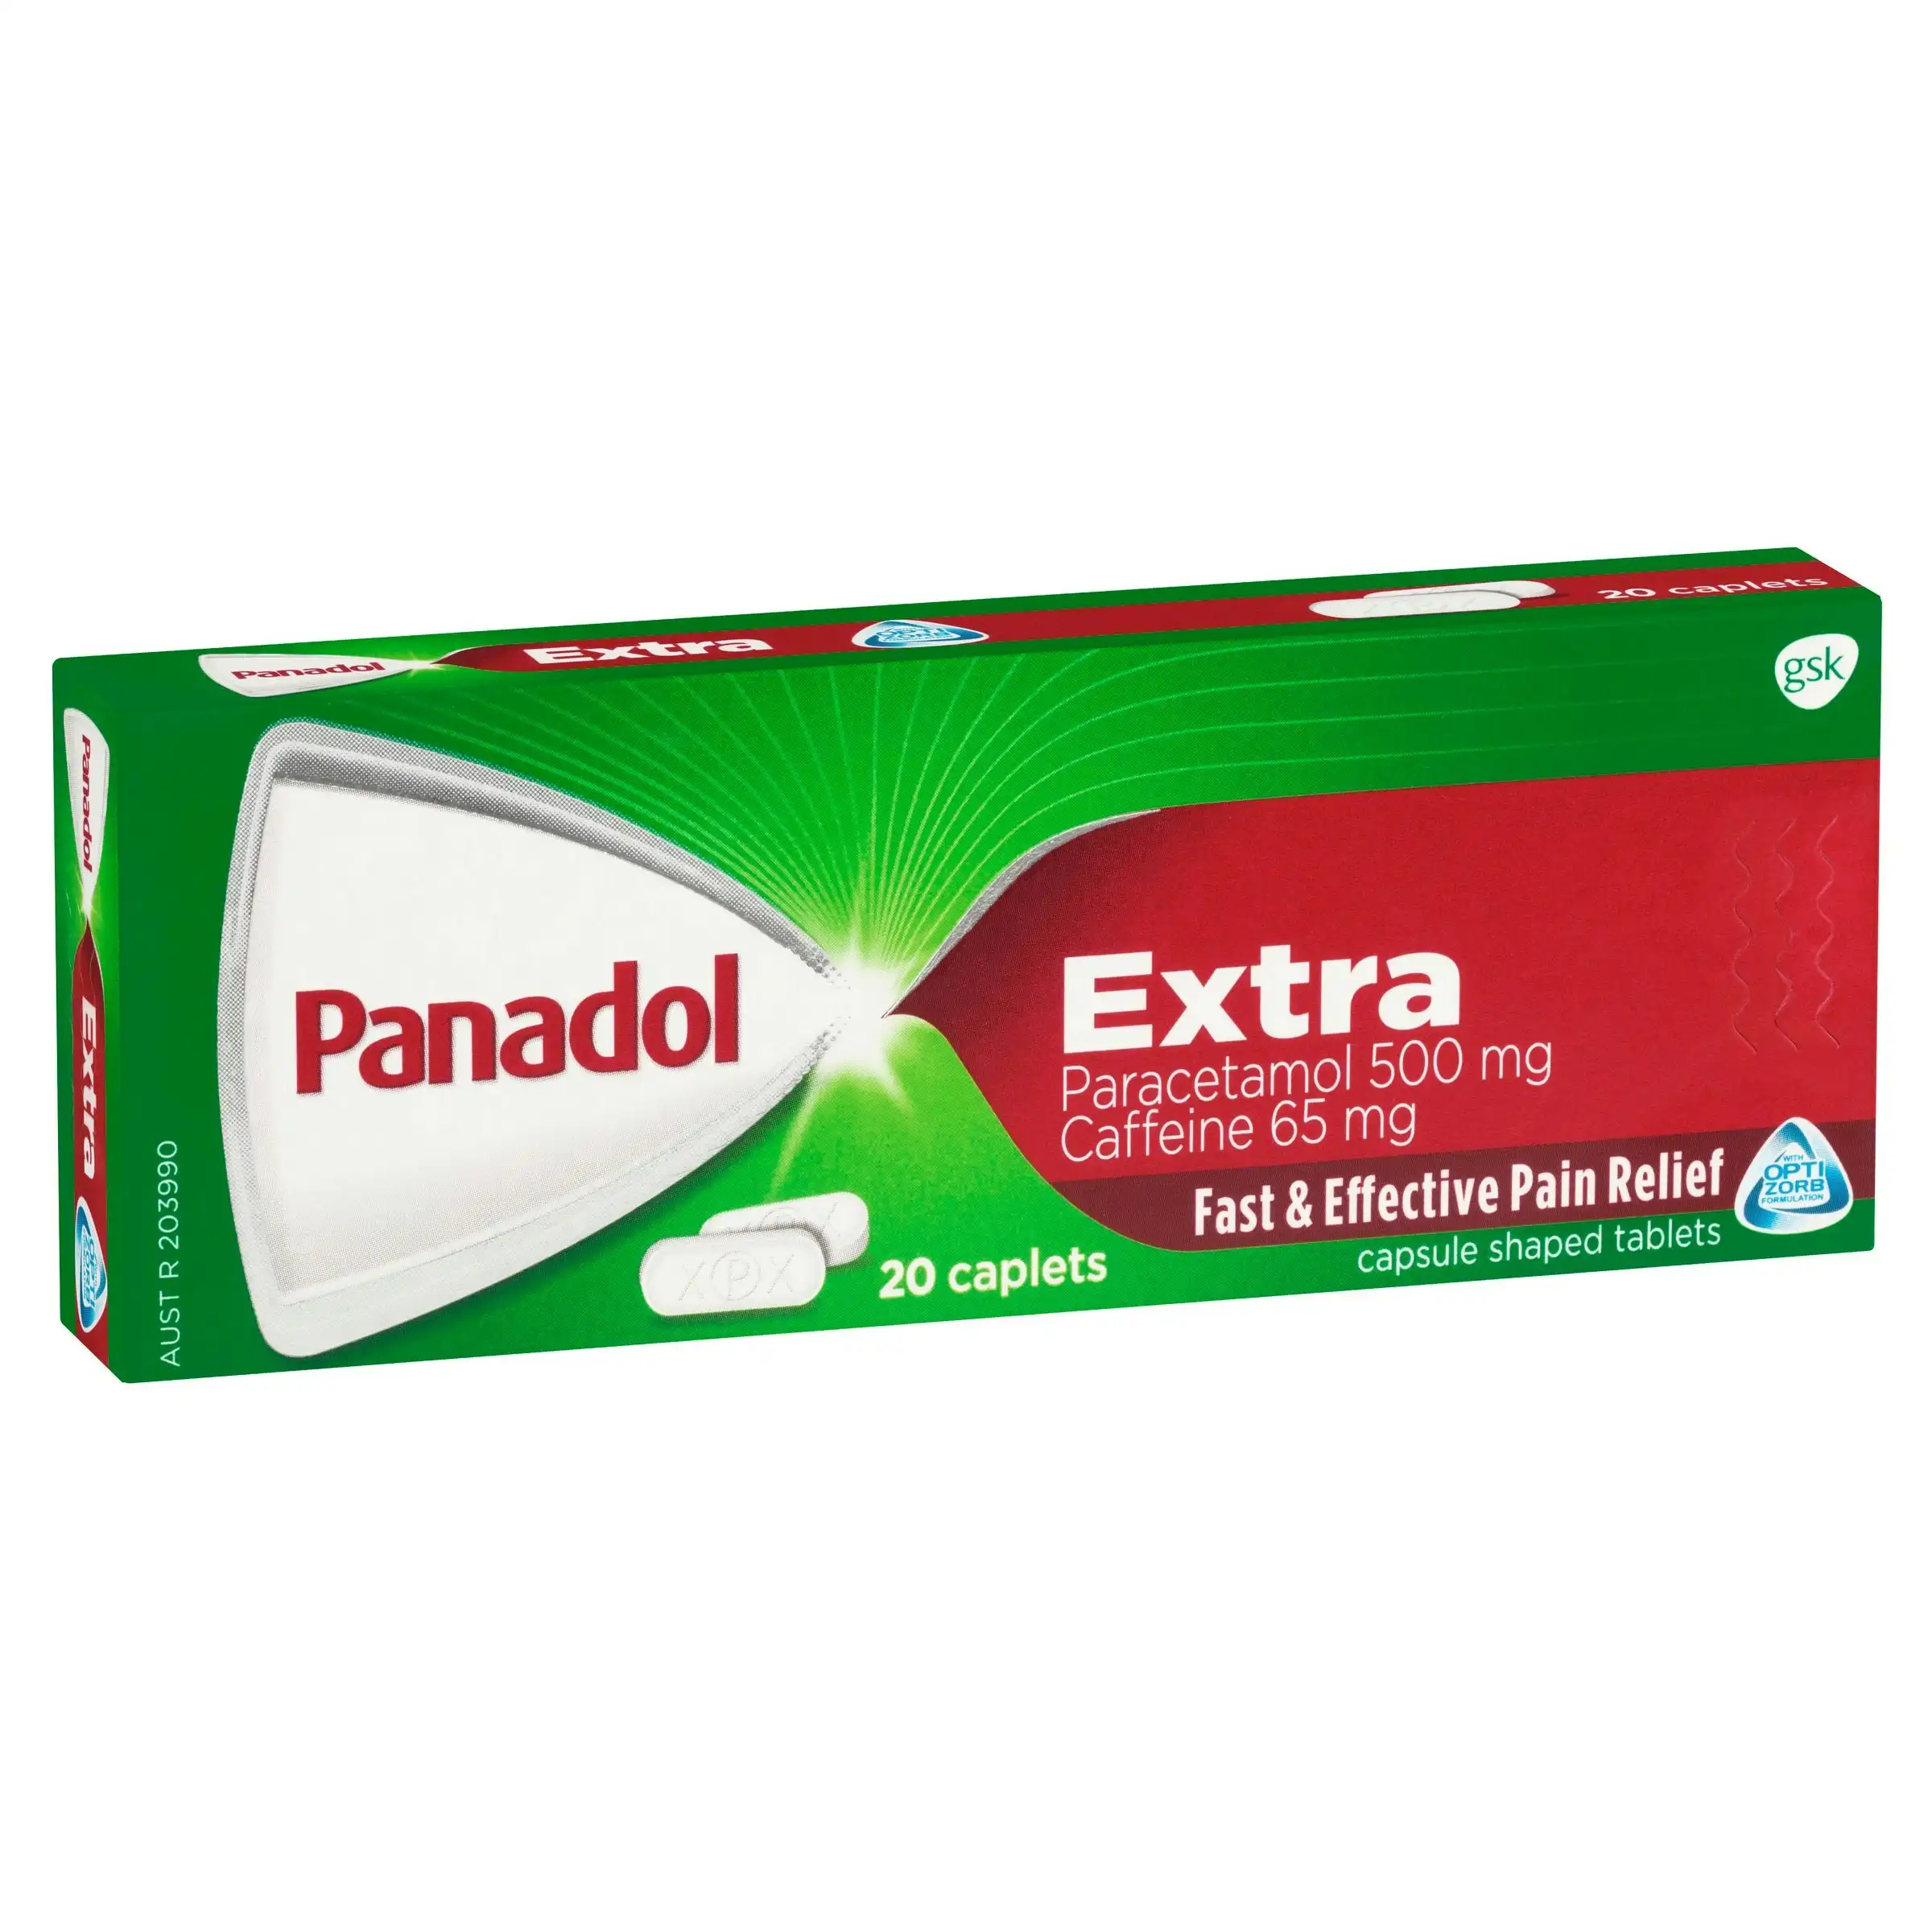 Panadol Extra with Optizorb Paracetamol Pain Relief 20 Caplets